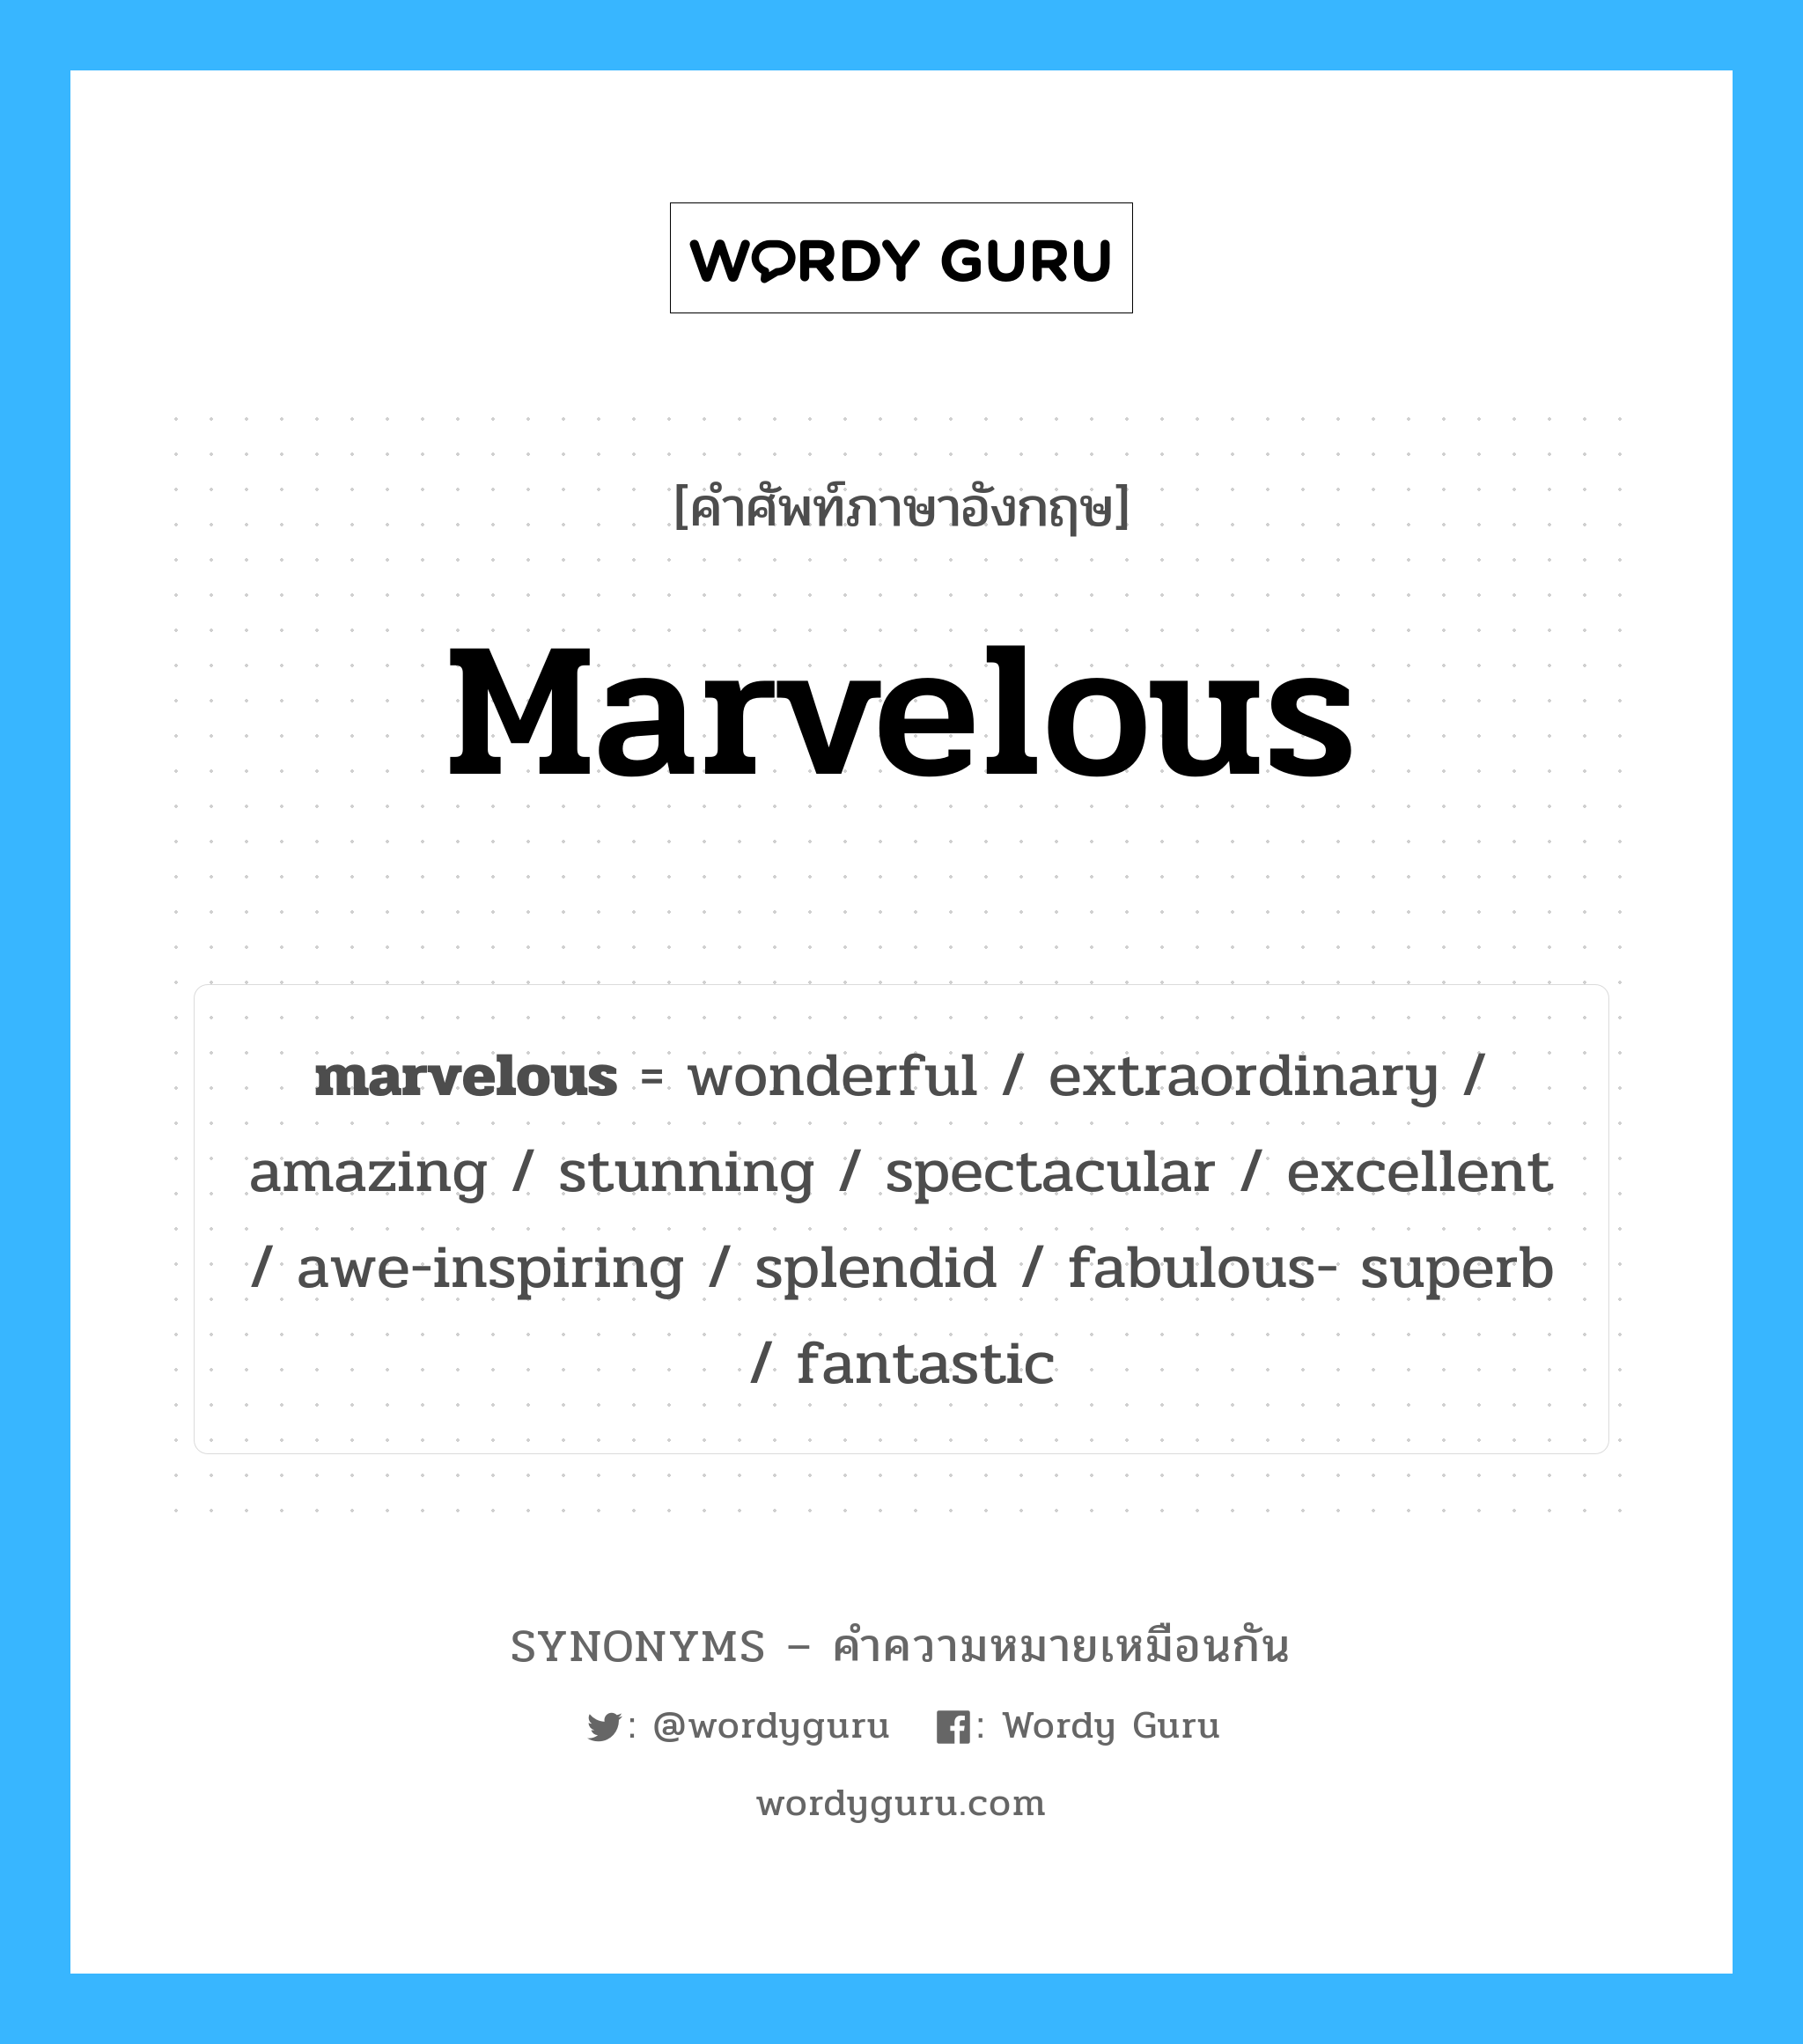 amazing เป็นหนึ่งใน marvelous และมีคำอื่น ๆ อีกดังนี้, คำศัพท์ภาษาอังกฤษ amazing ความหมายคล้ายกันกับ marvelous แปลว่า ตื่นตาตื่นใจ หมวด marvelous